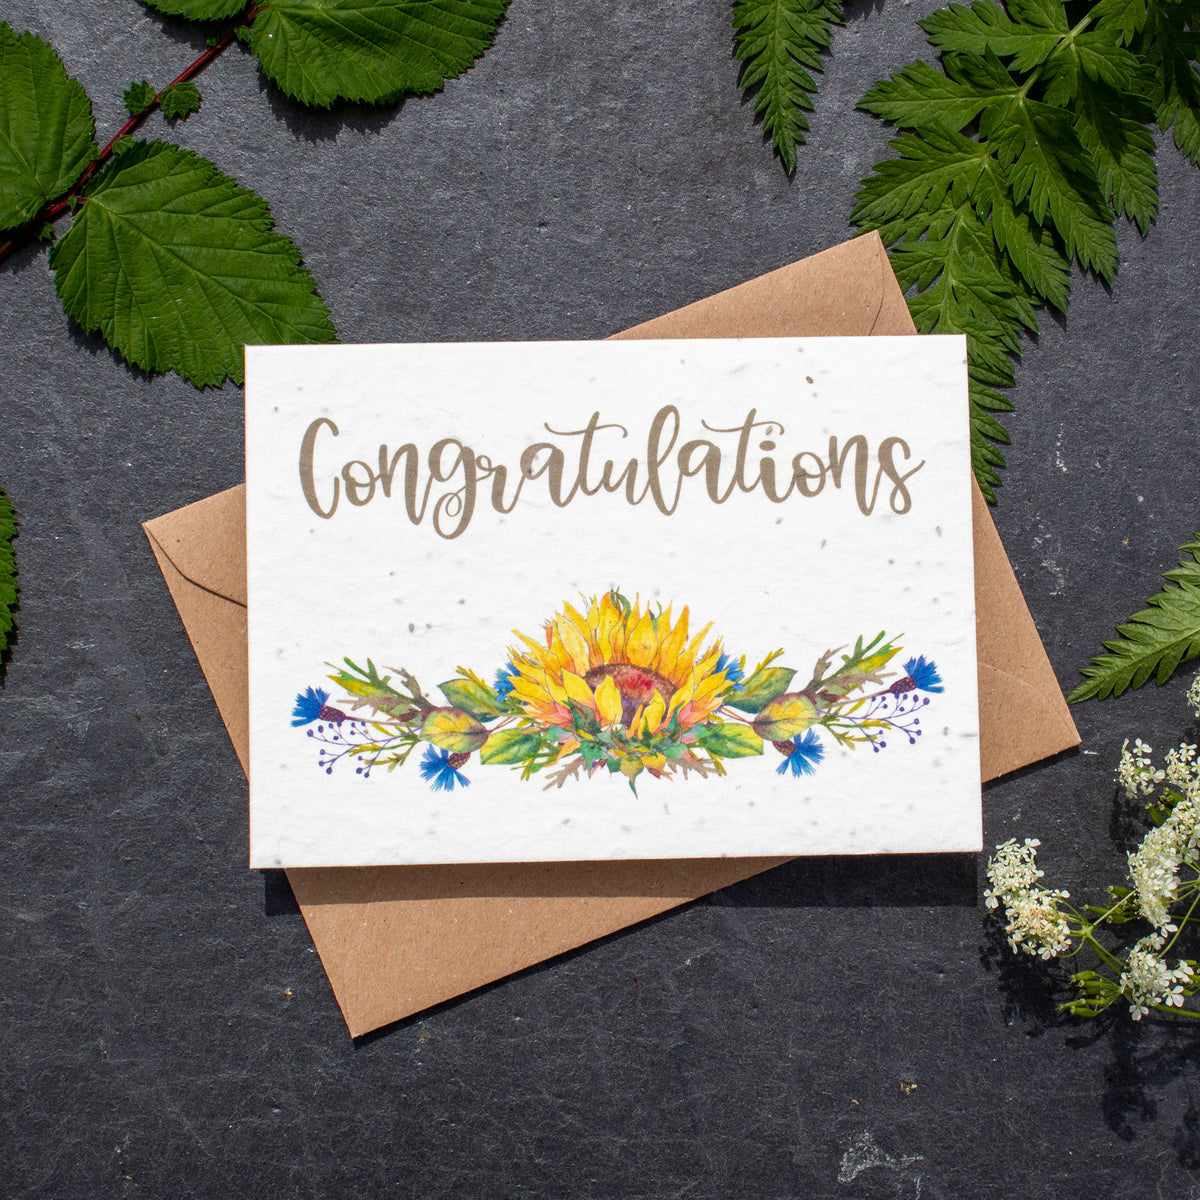 Plantable Greetings Card - Congratulations